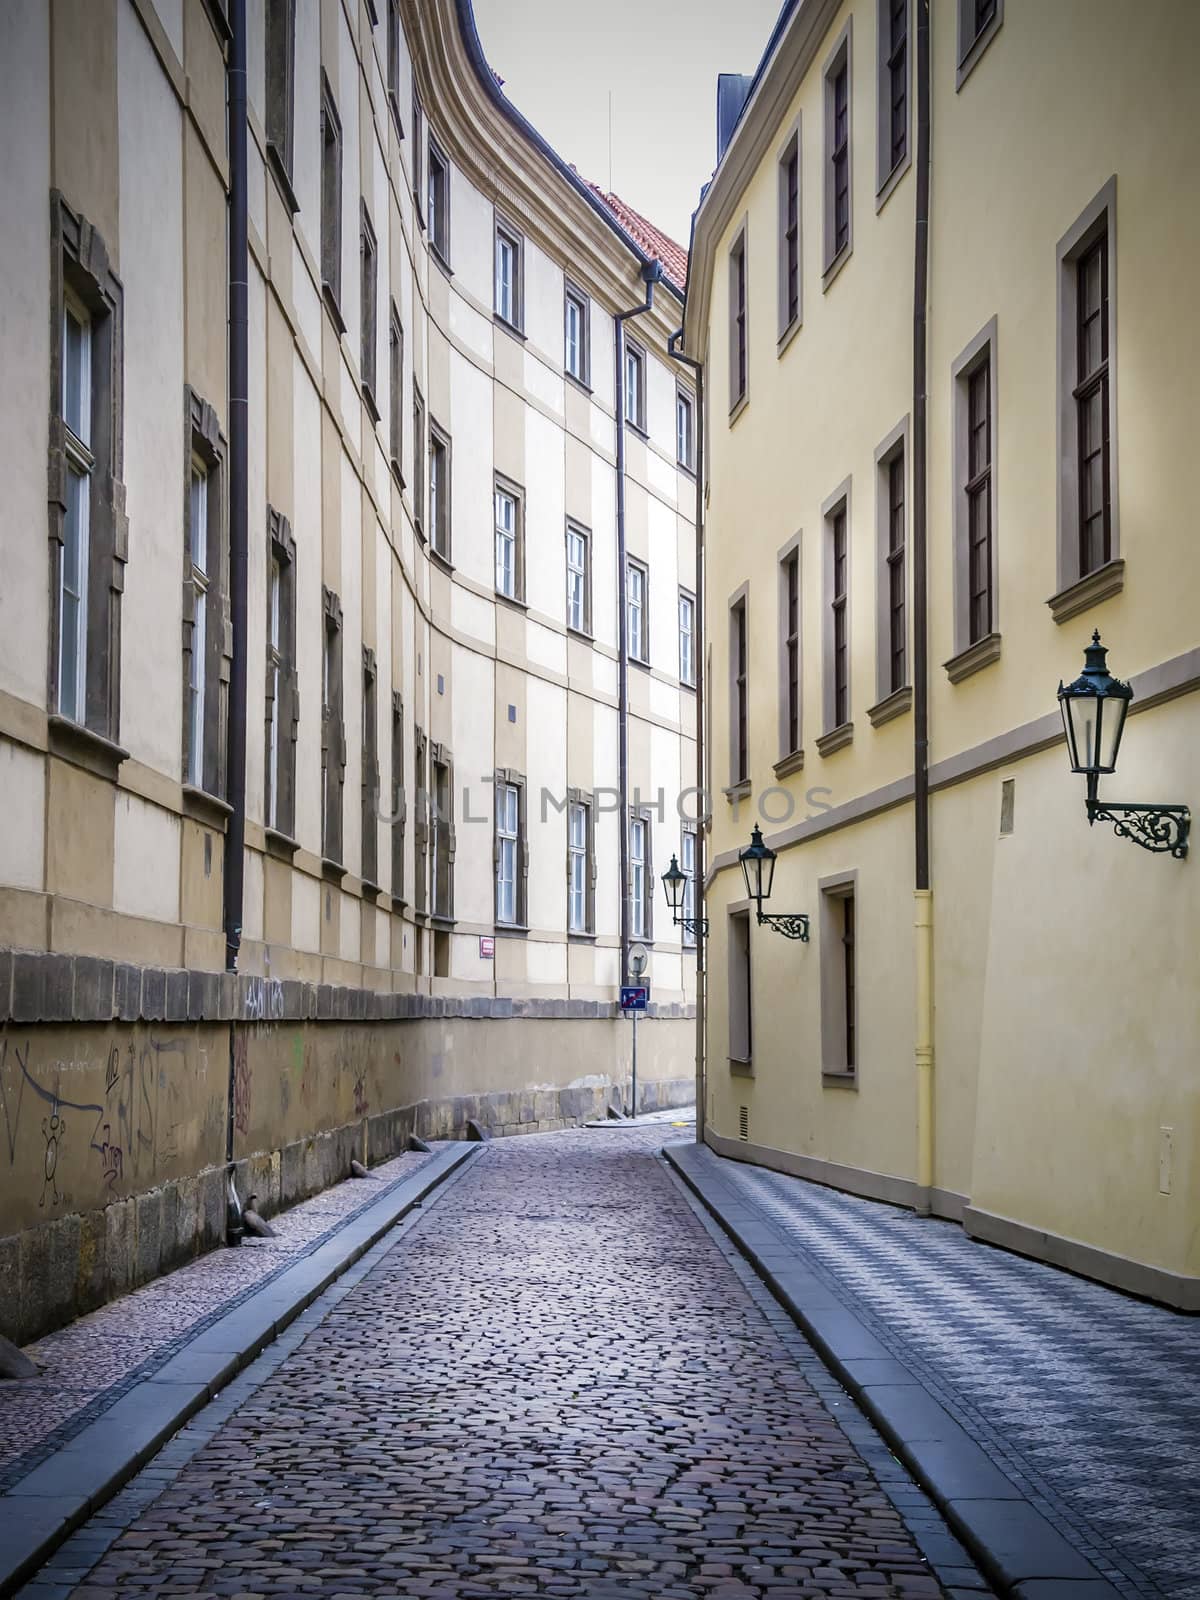 Narrwo alley in Prague by w20er